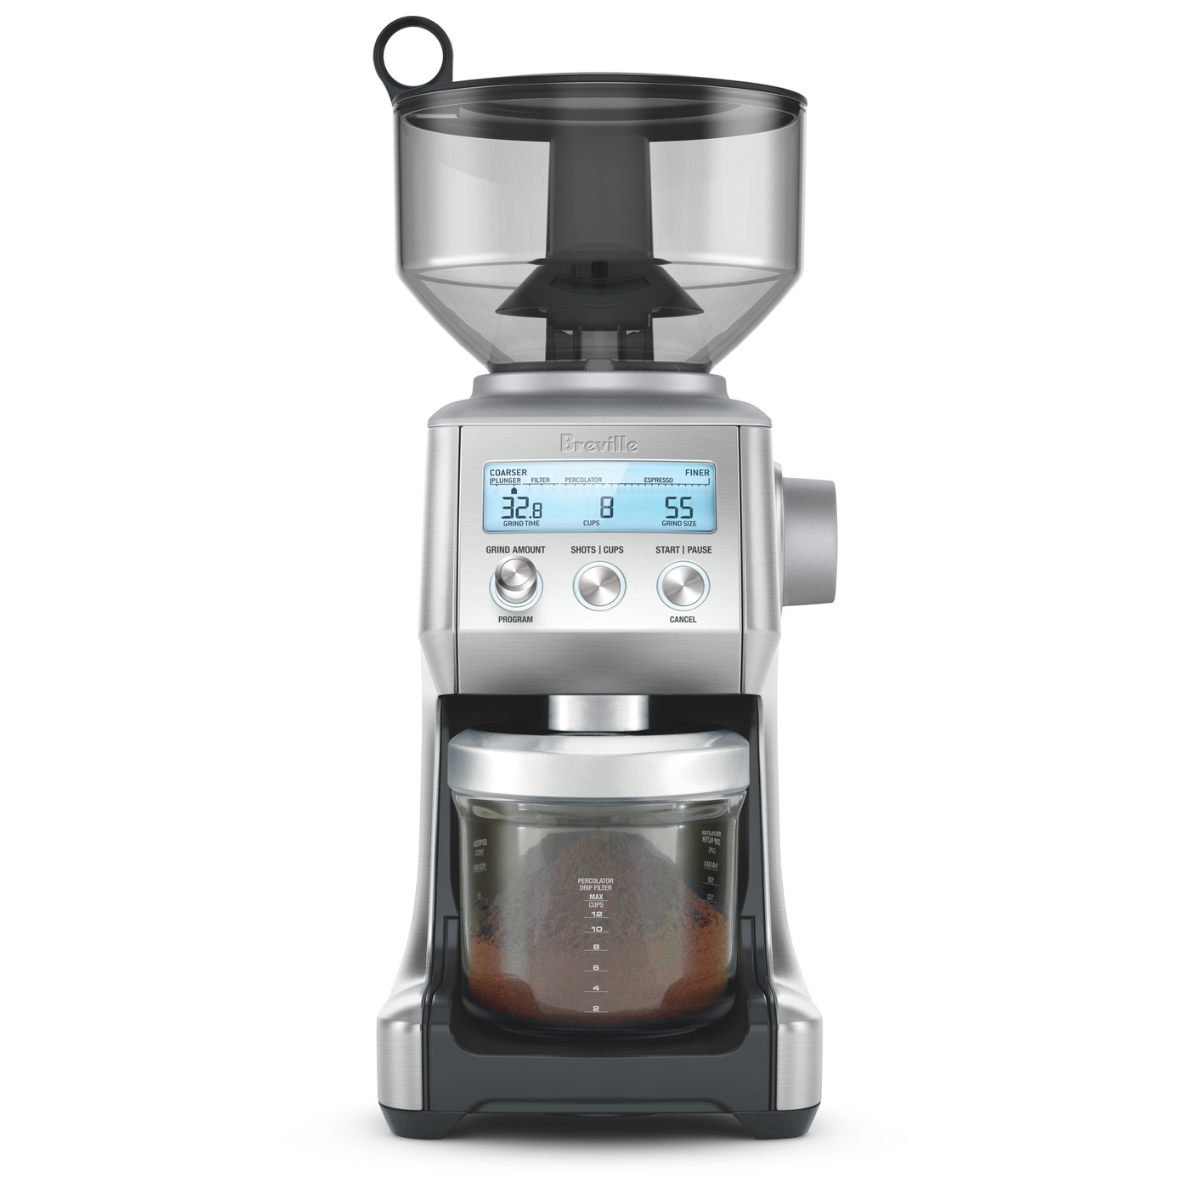 9-Cup Coffee Maker & Conical Burr Coffee Grinder Bundle